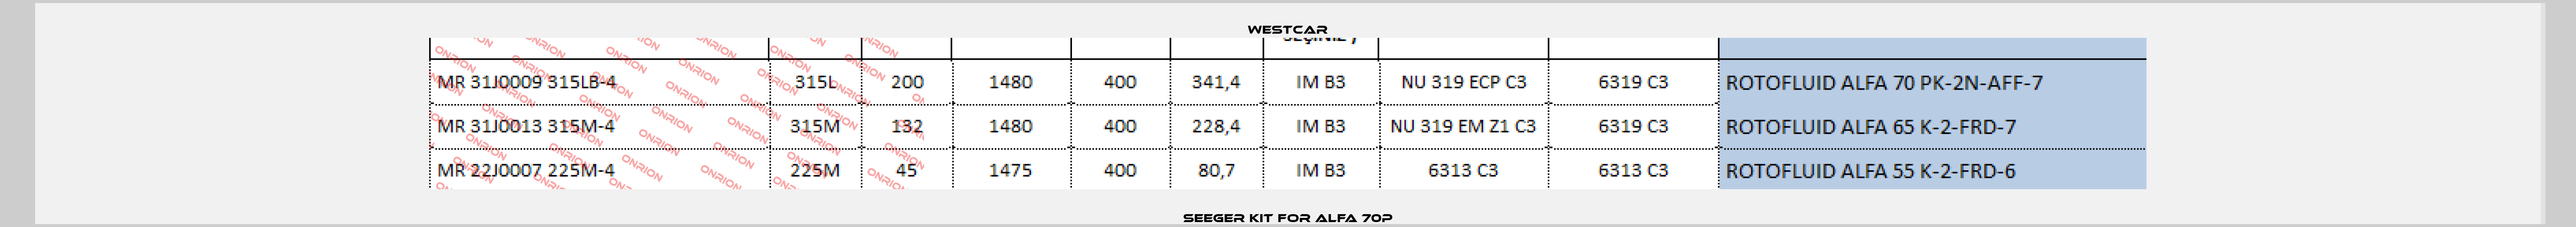 Seeger kit for Alfa 70P Westcar